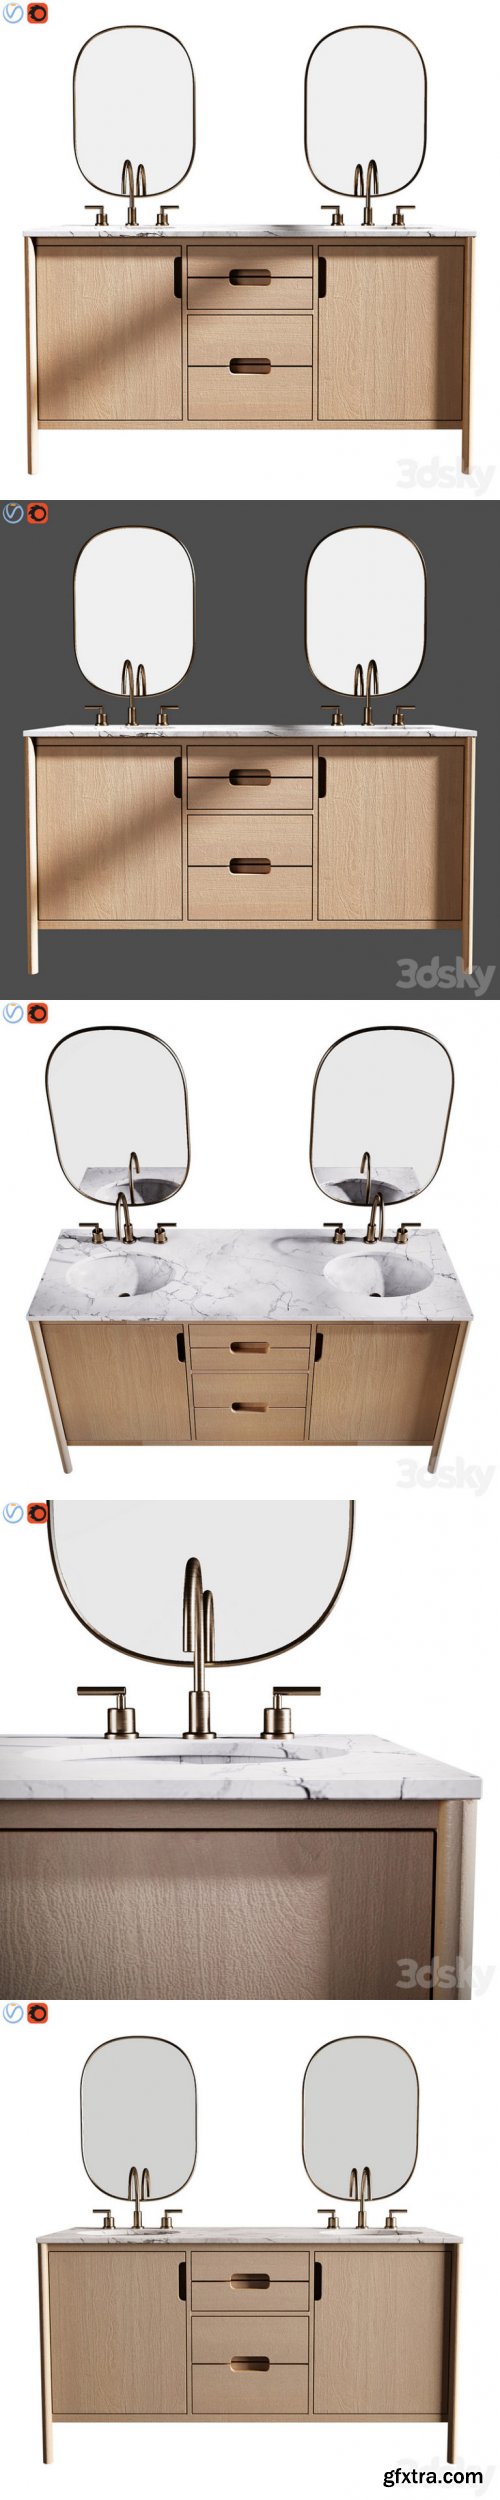 Manzanita 60 Double Sink Vanity